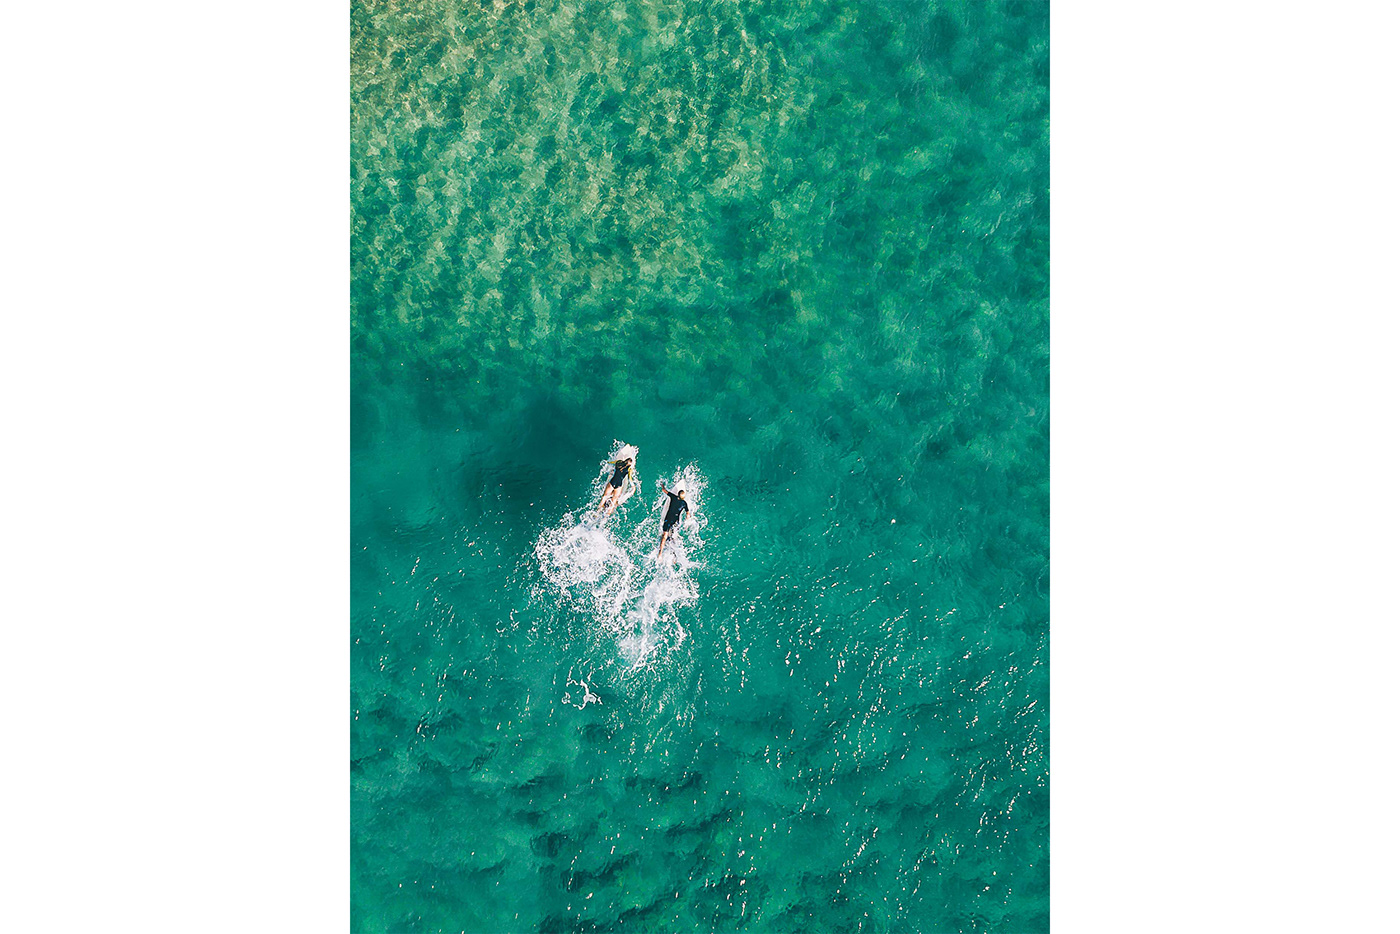 Aerial Australia India Indian Ocean Island pacific ocean rockpool snorkel surfing Thailand